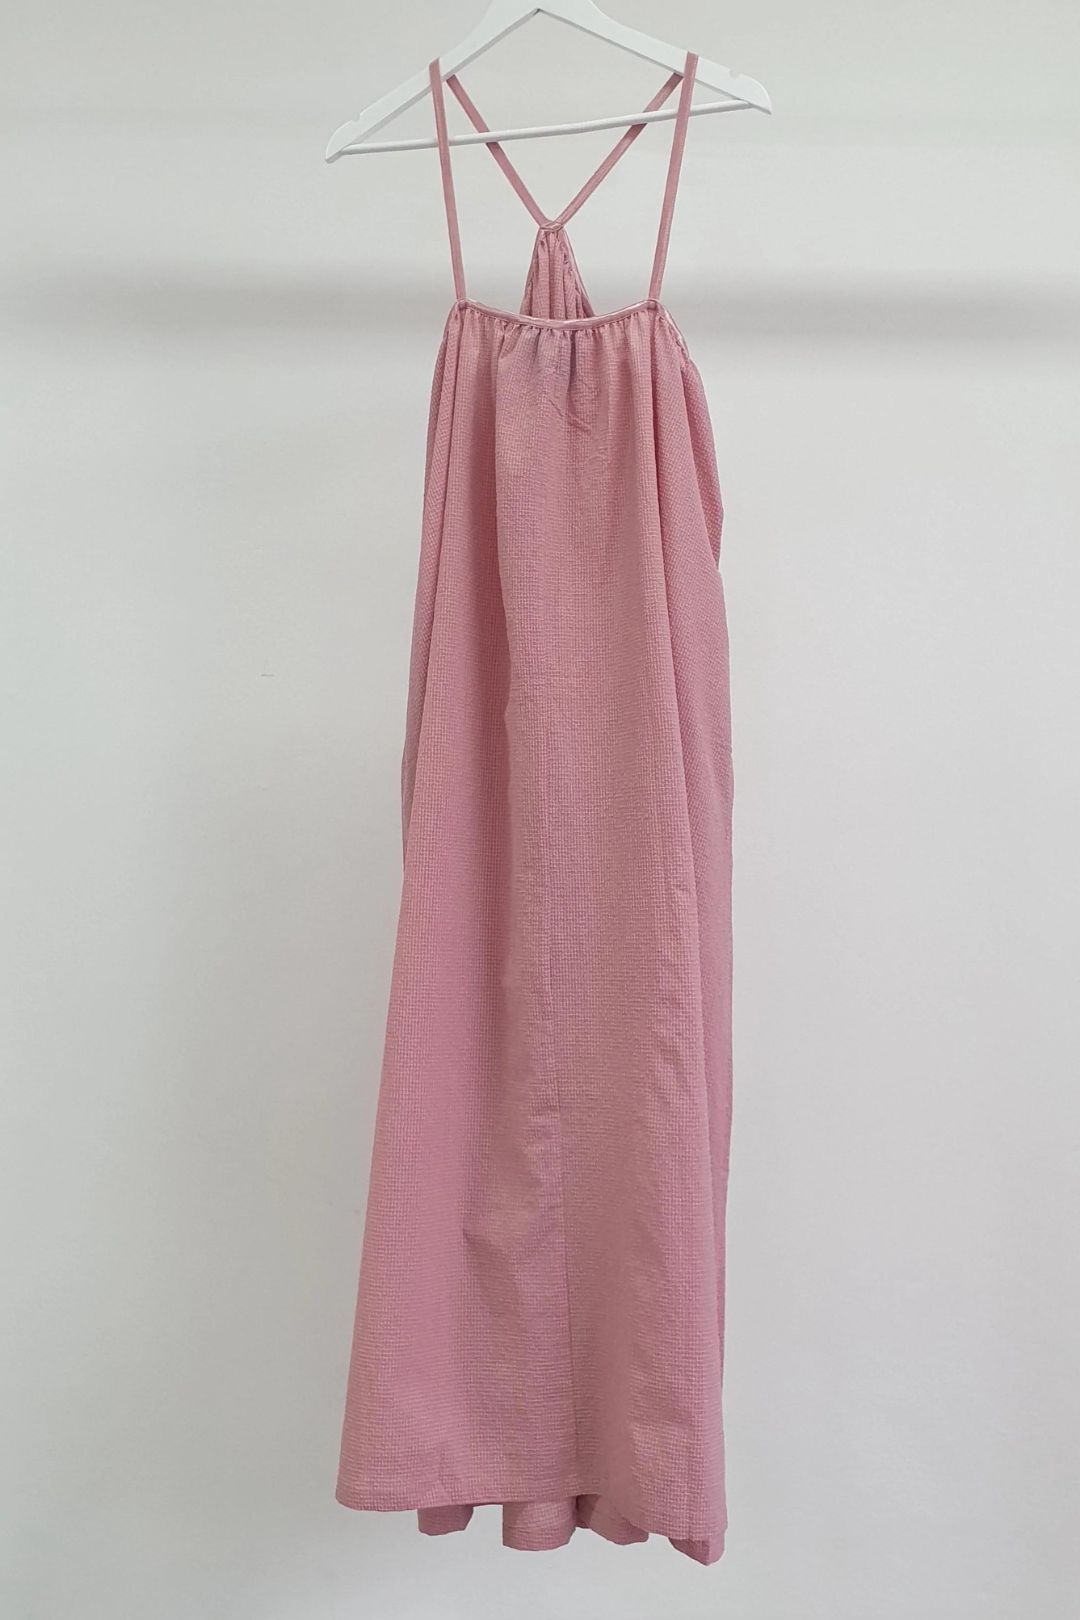 Blanca - Verity Dress in Pink